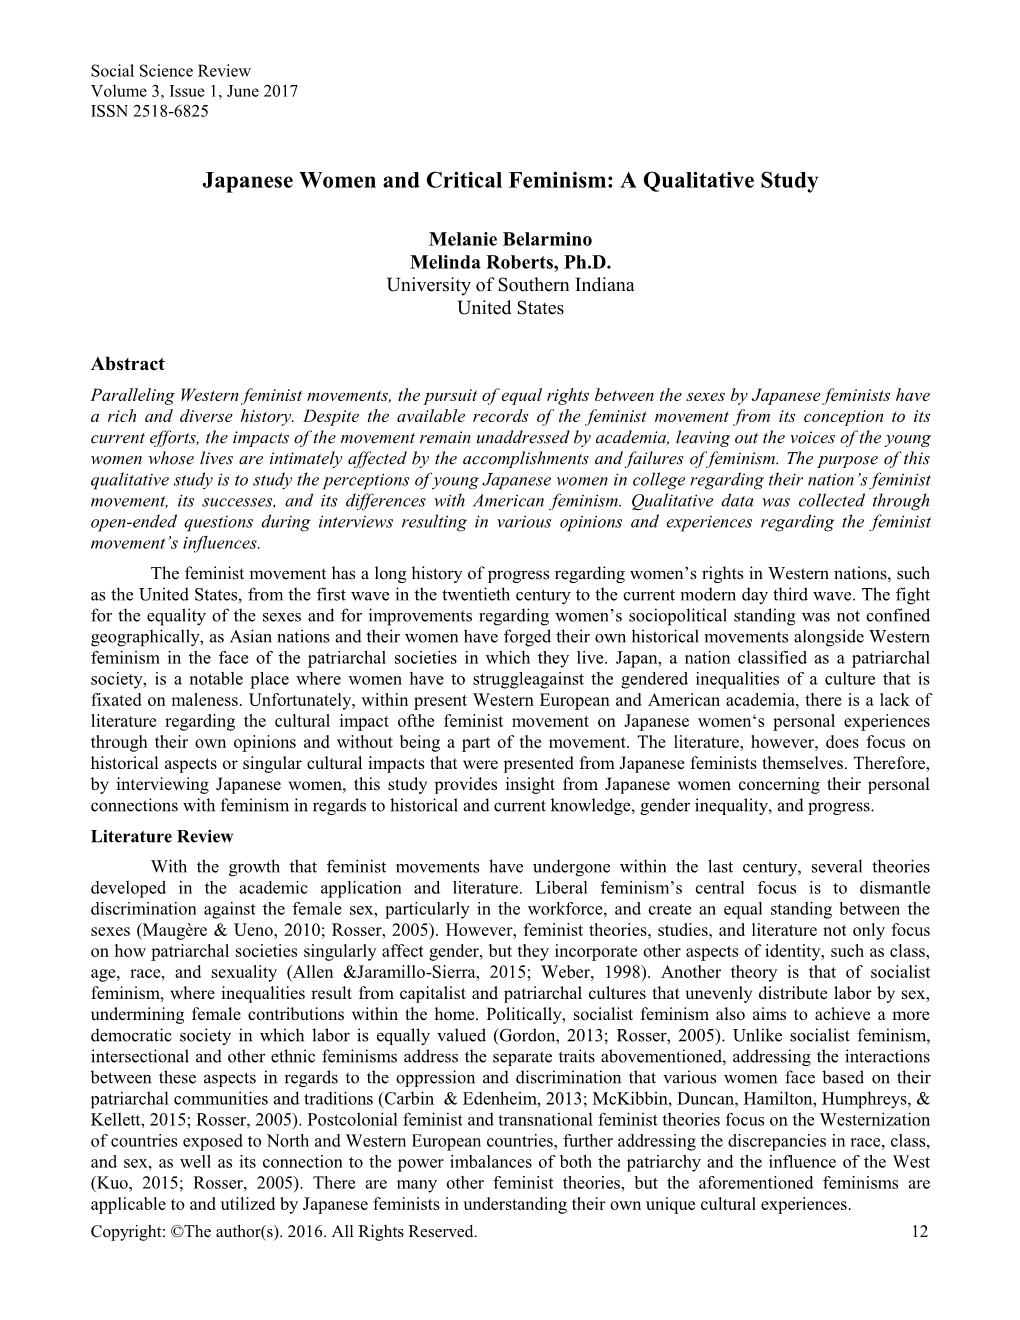 Japanese Women and Critical Feminism: a Qualitative Study